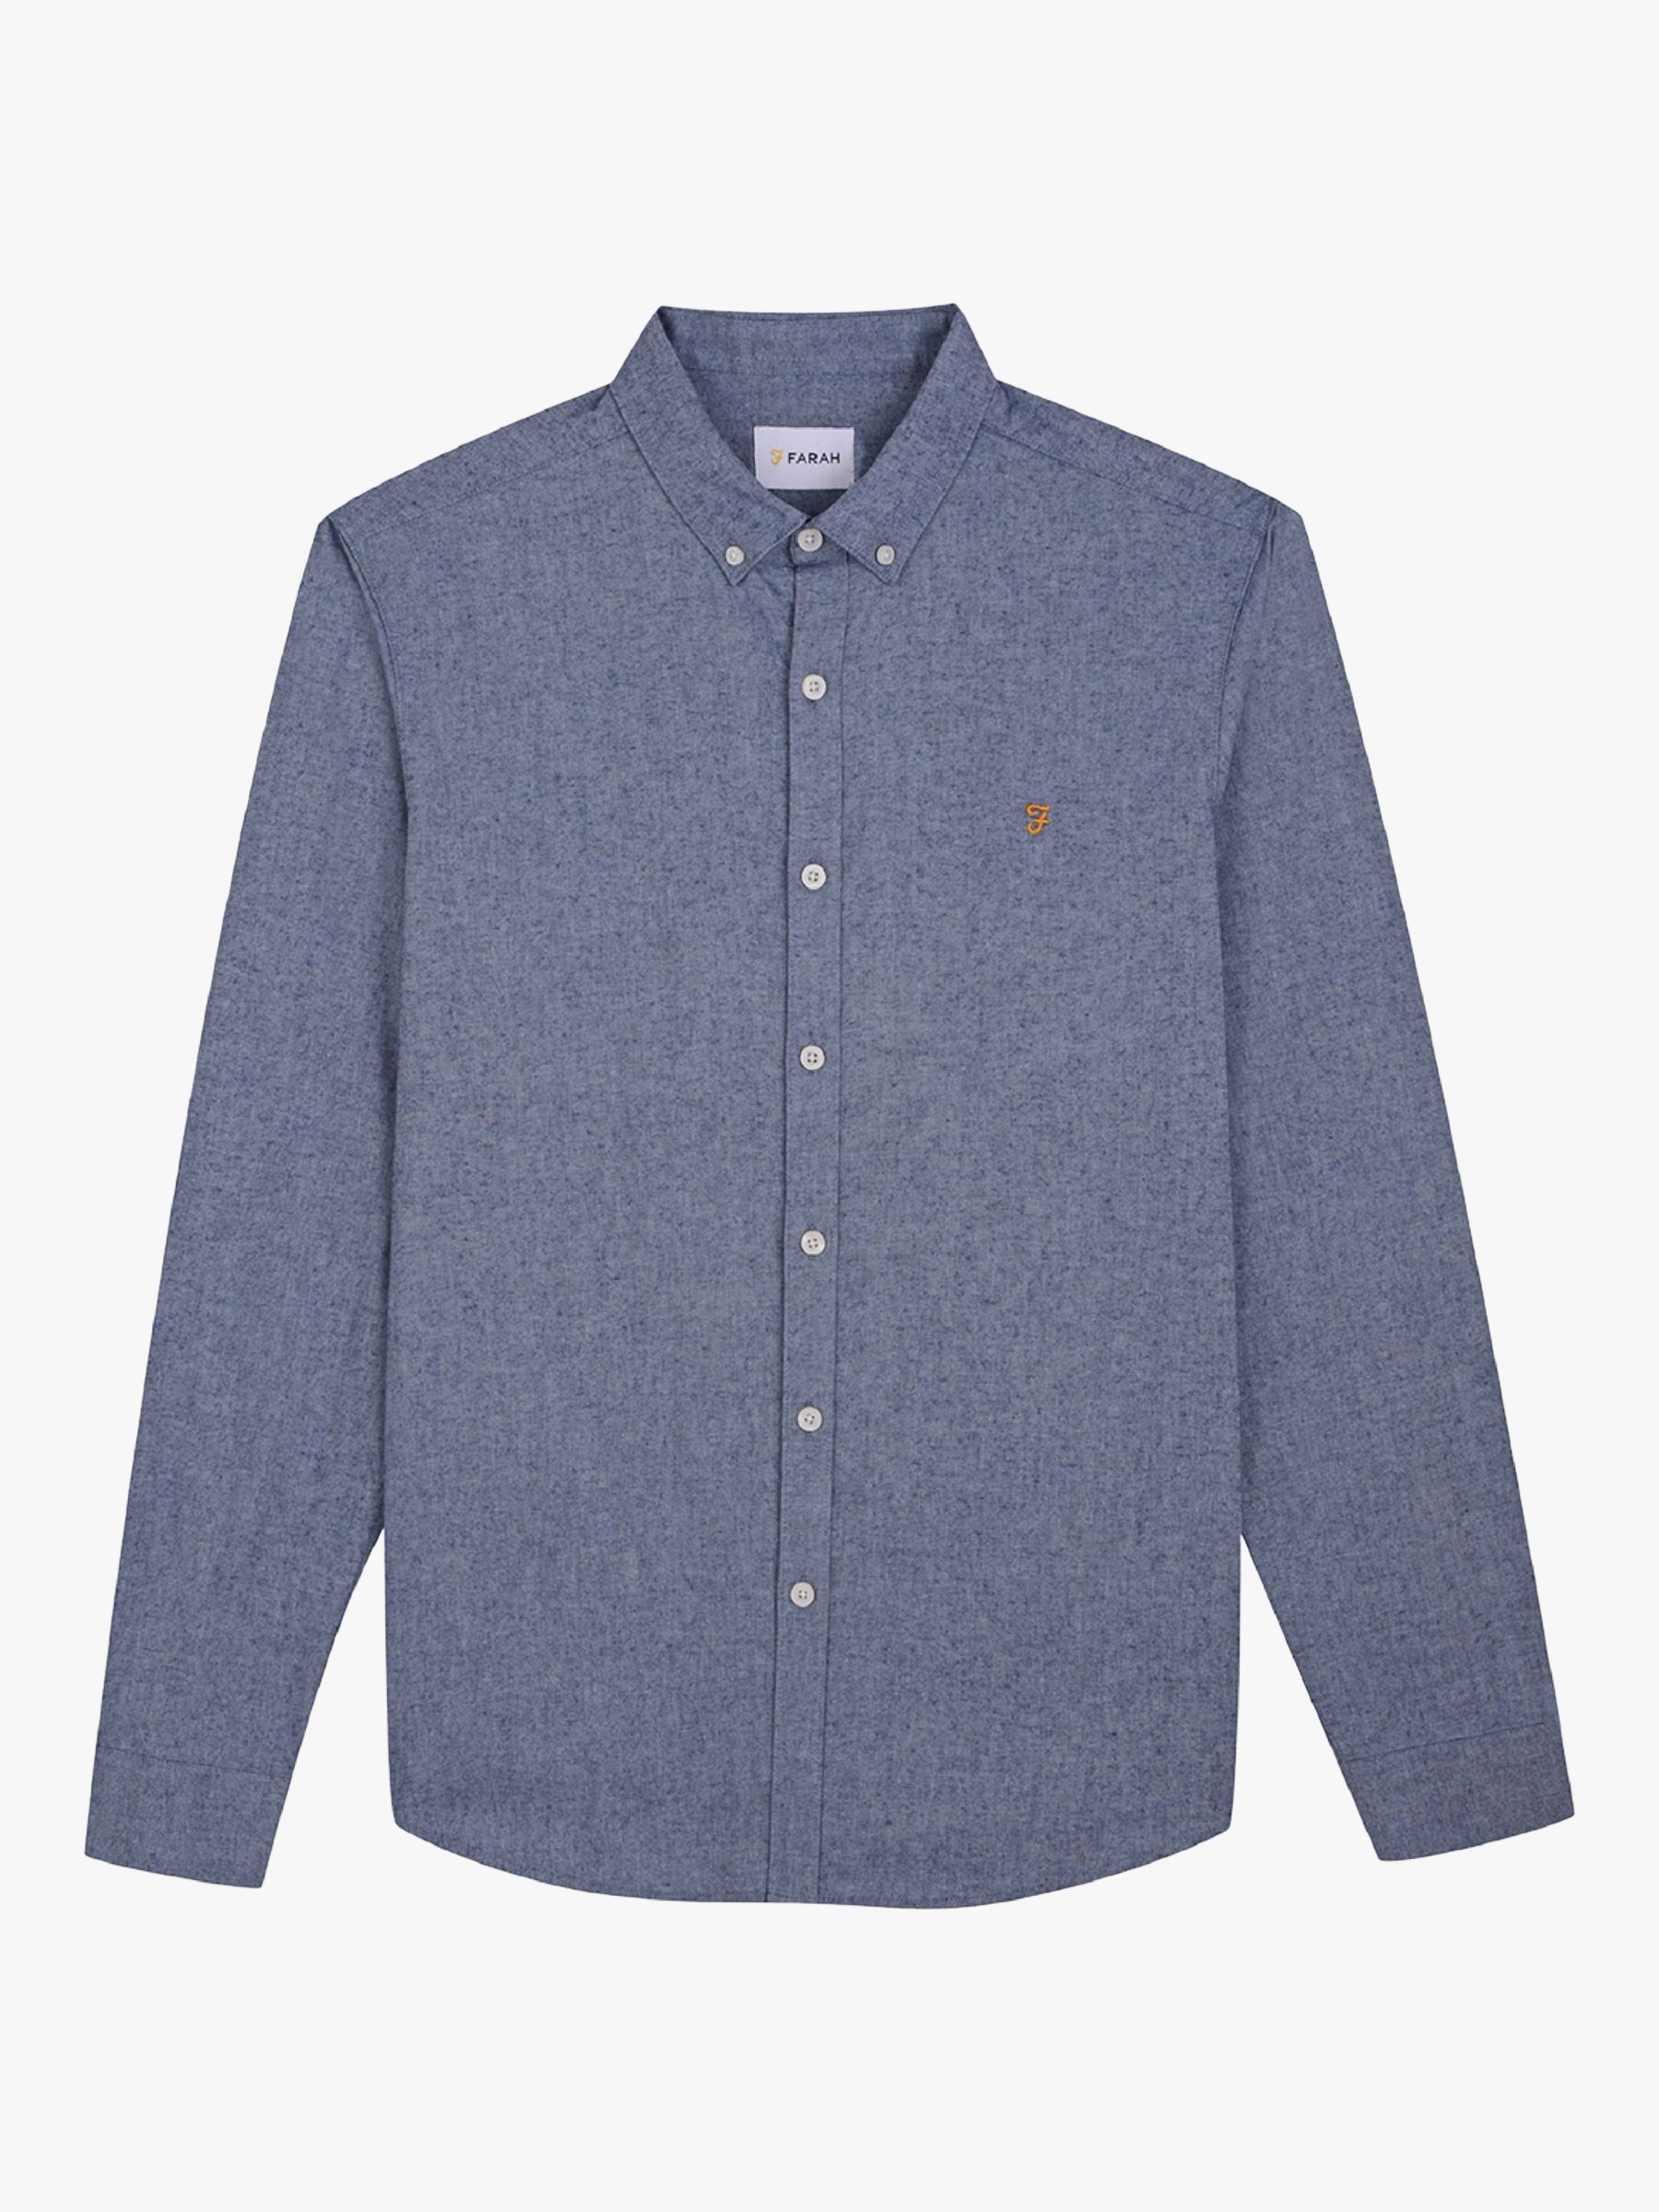 Farah Steen Slim Fit Organic Cotton Oxford Shirt, 985 Bb Blue Bell, S